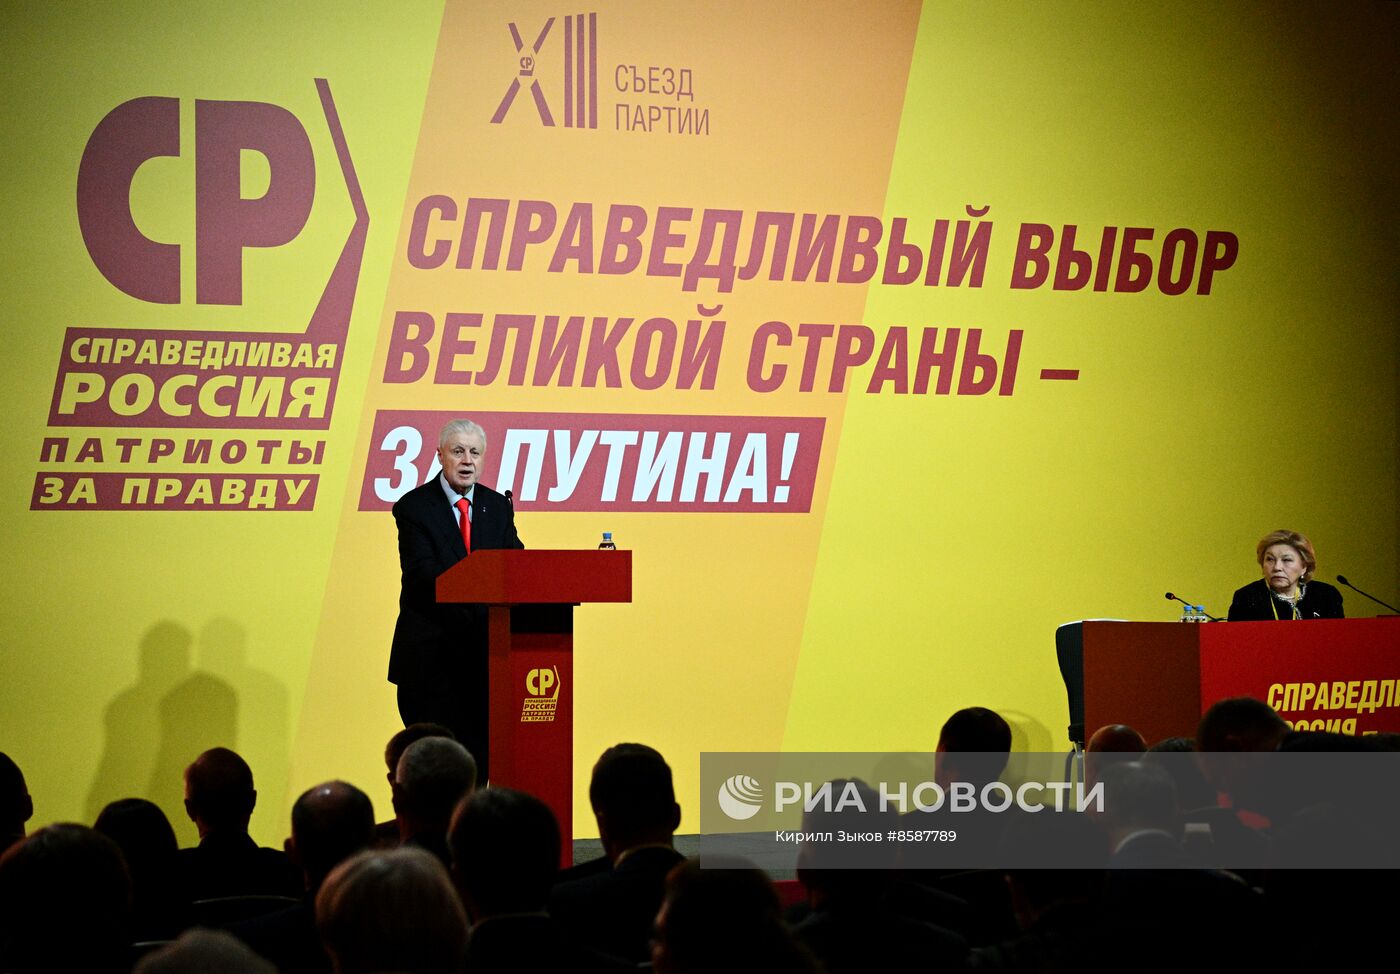 XIII Съезд партии "Справедливая Россия - за правду" 